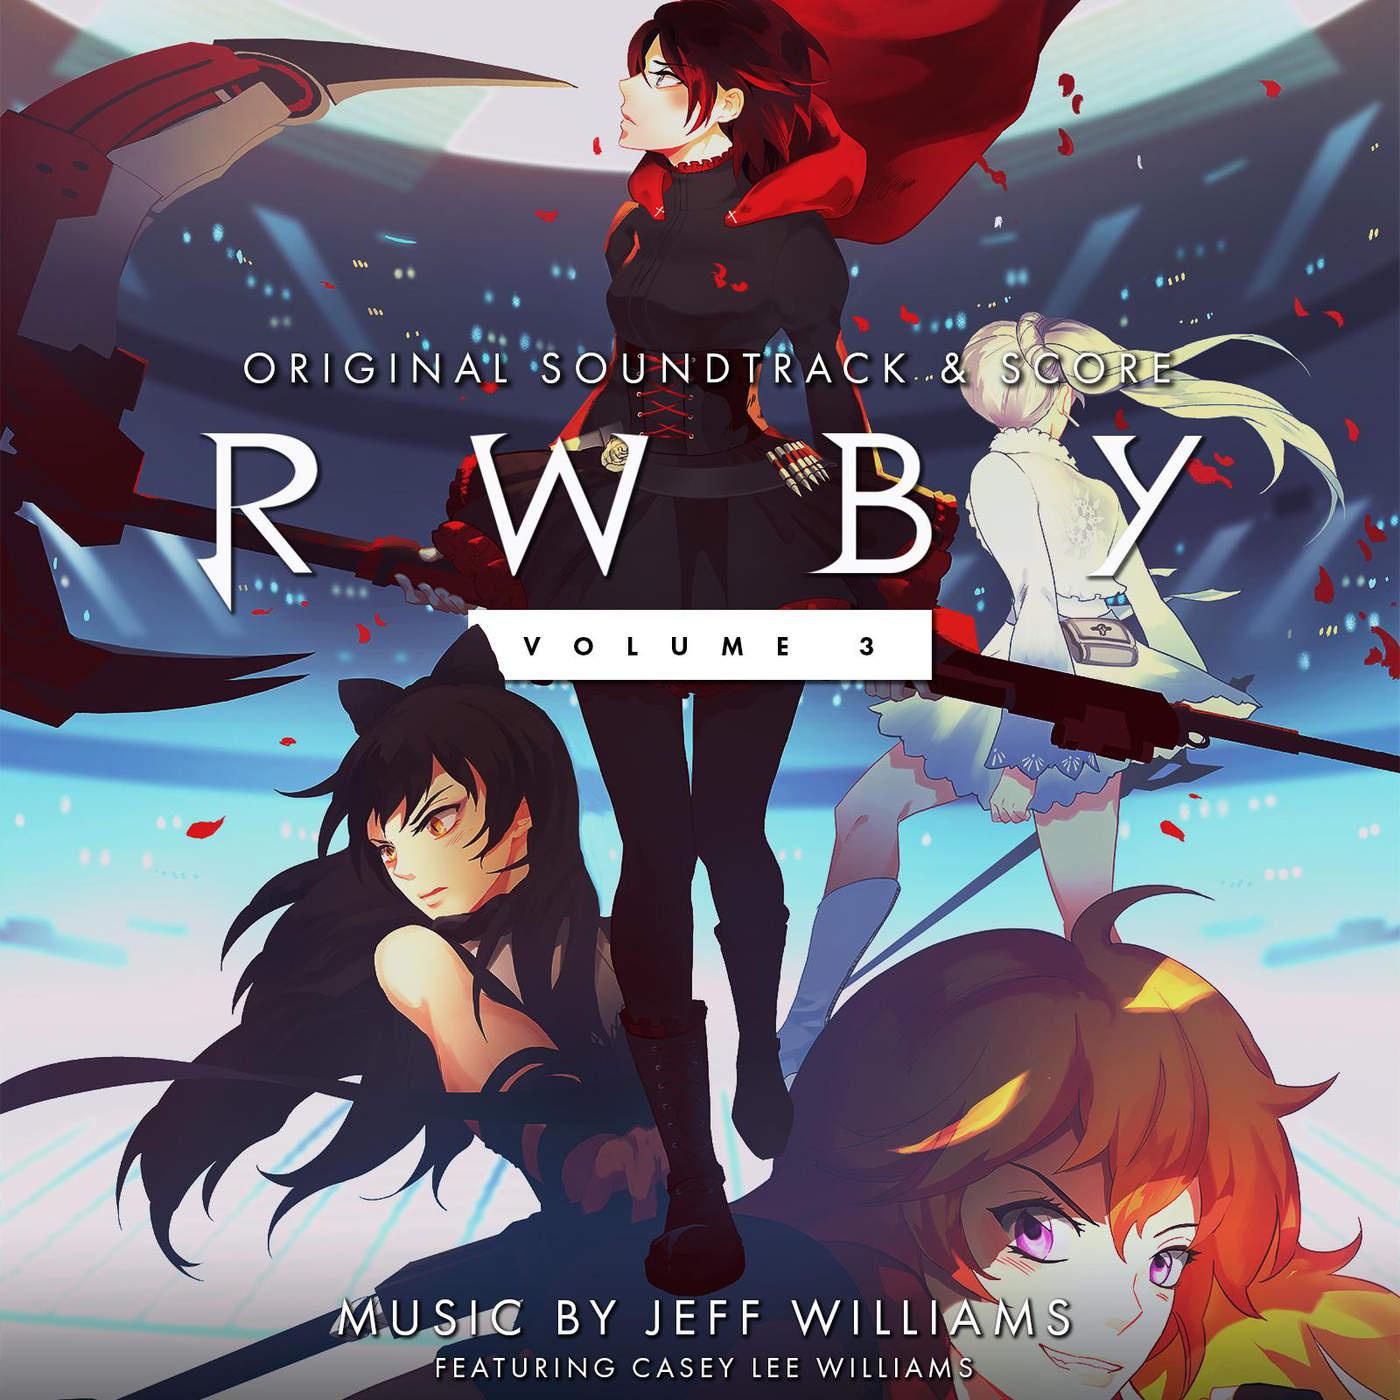 歌词131 rwby volume 3 original soundtrack & score专辑 world of